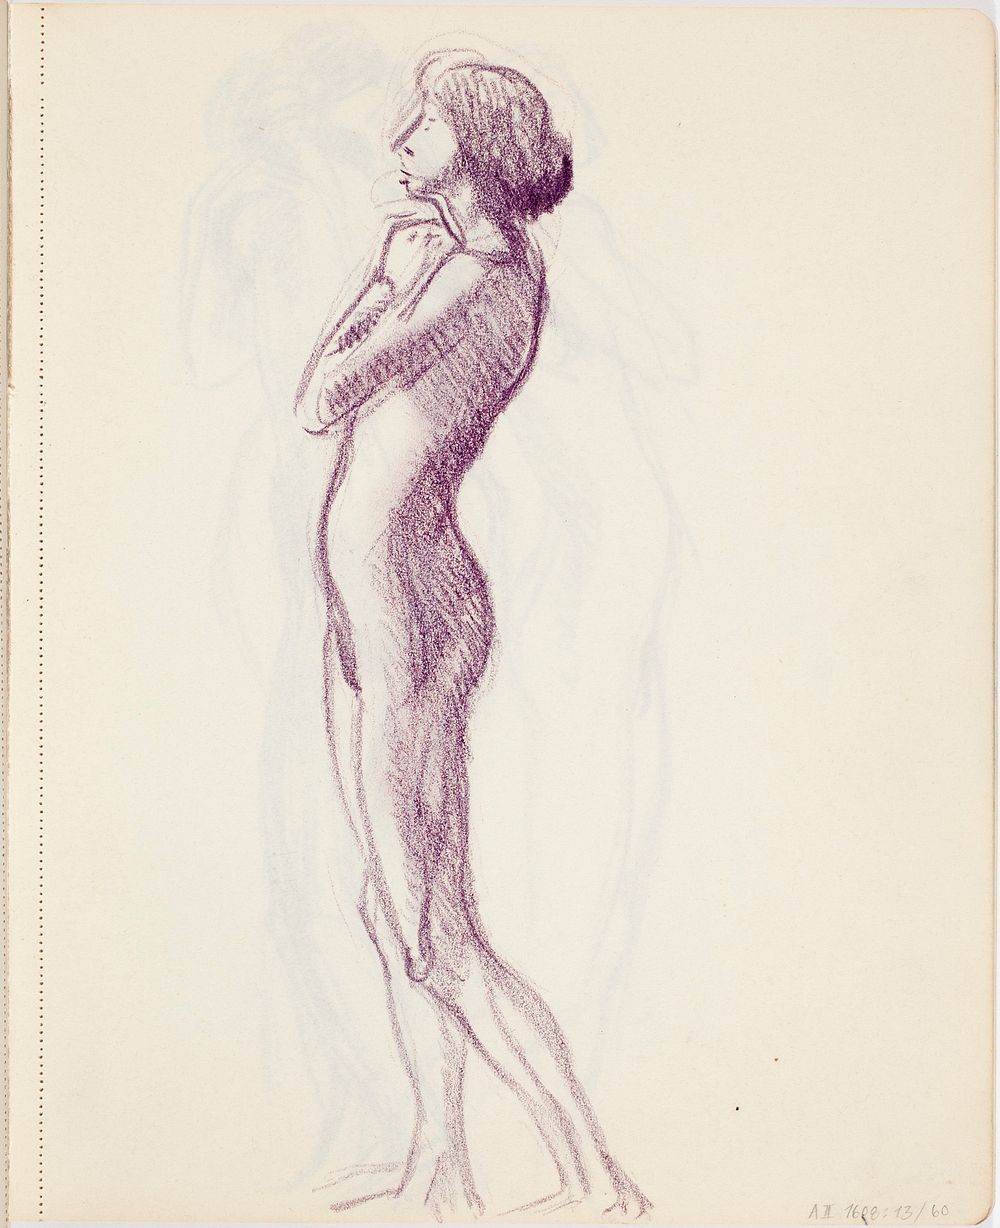 Seisova alaston nainen sivusta, luonnos, 1912part of a sketchbook by Magnus Enckell